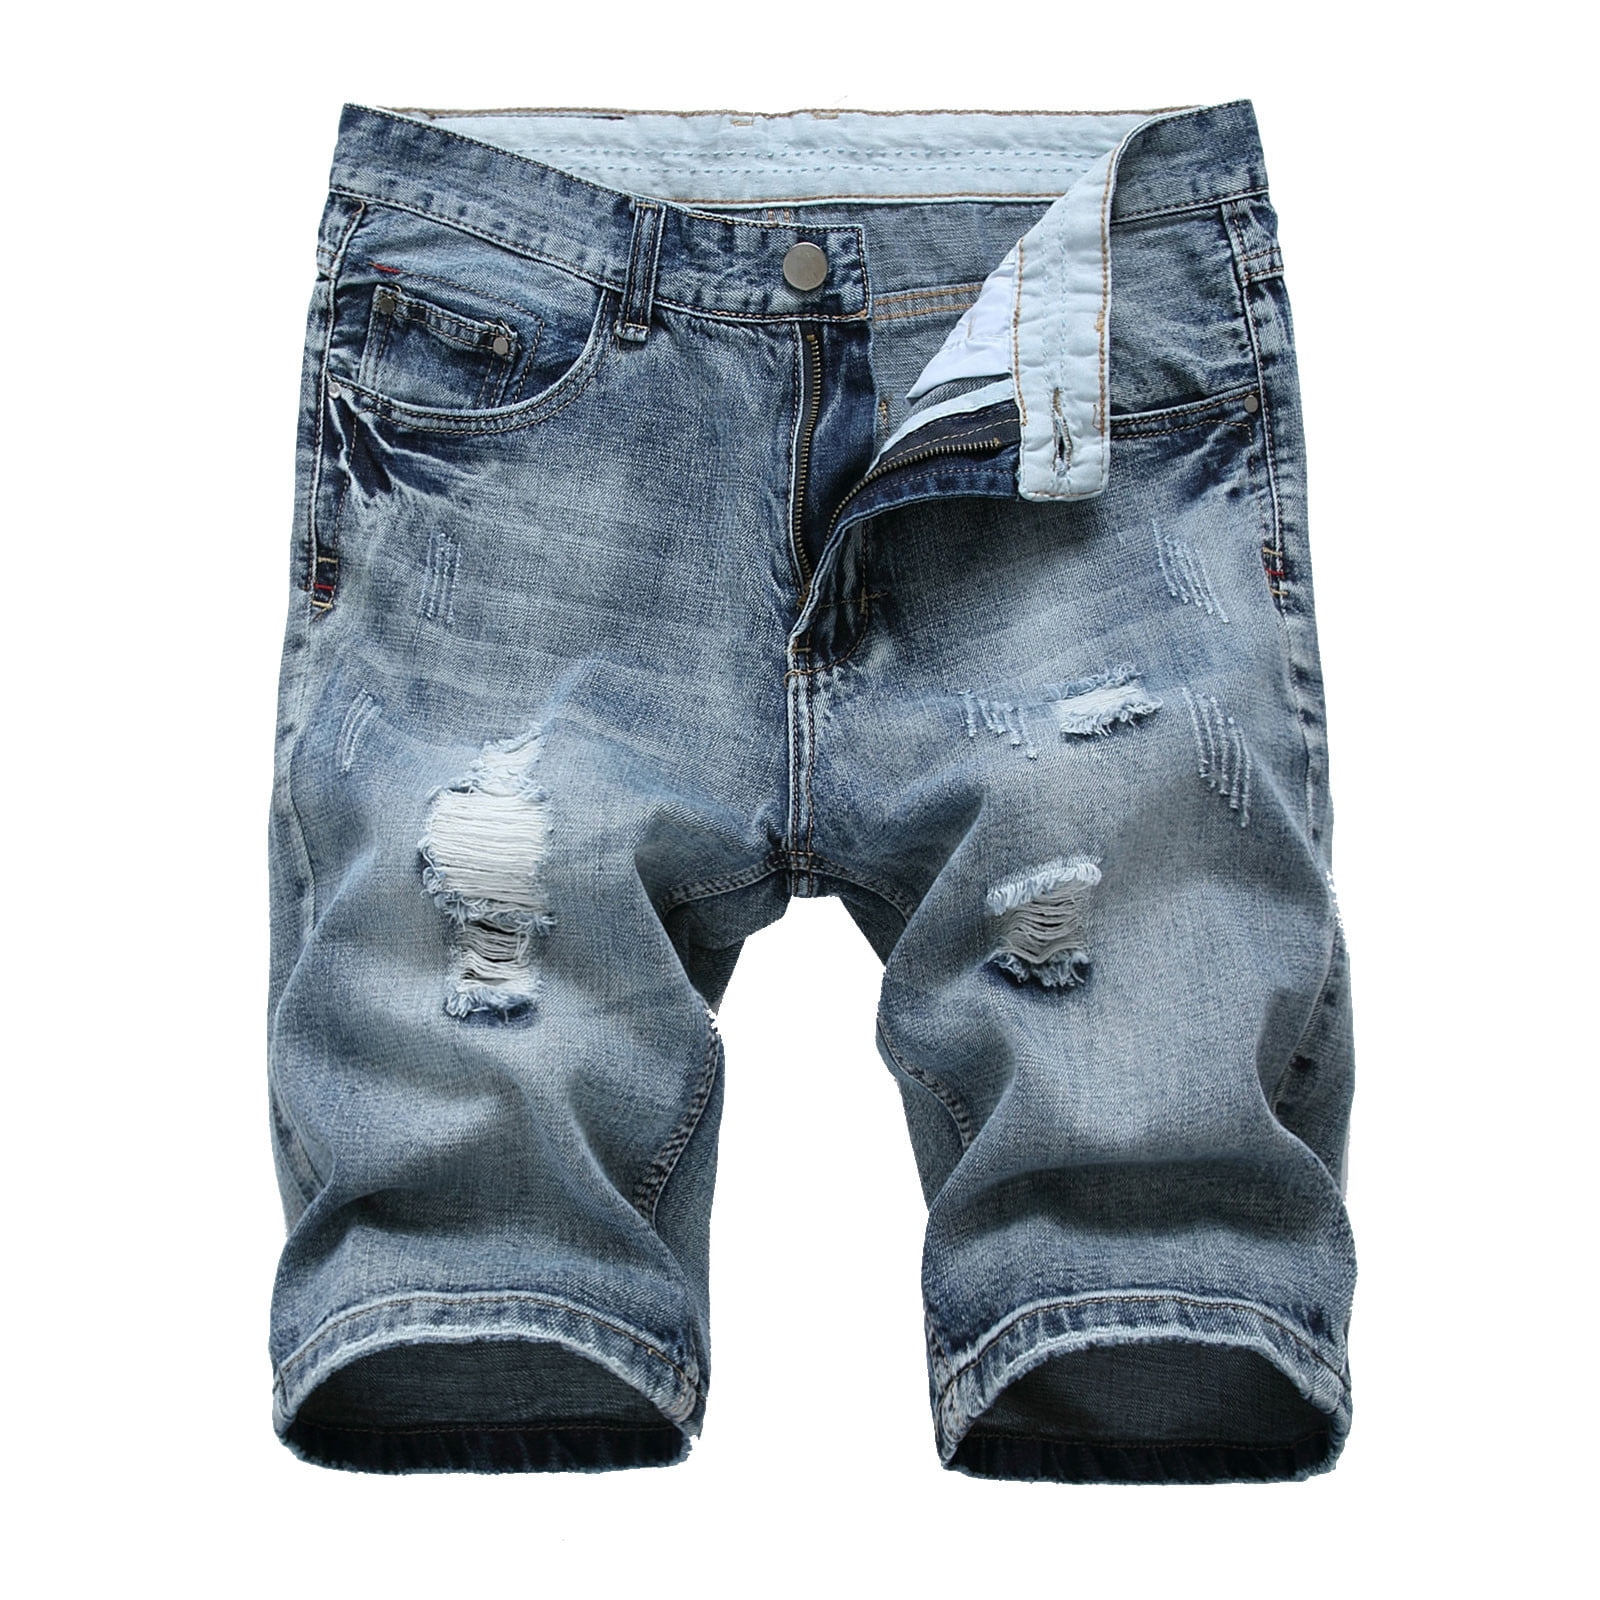 YYDGH Denim Shorts for Men Summer Vintage Washed Ripped Distressed ...